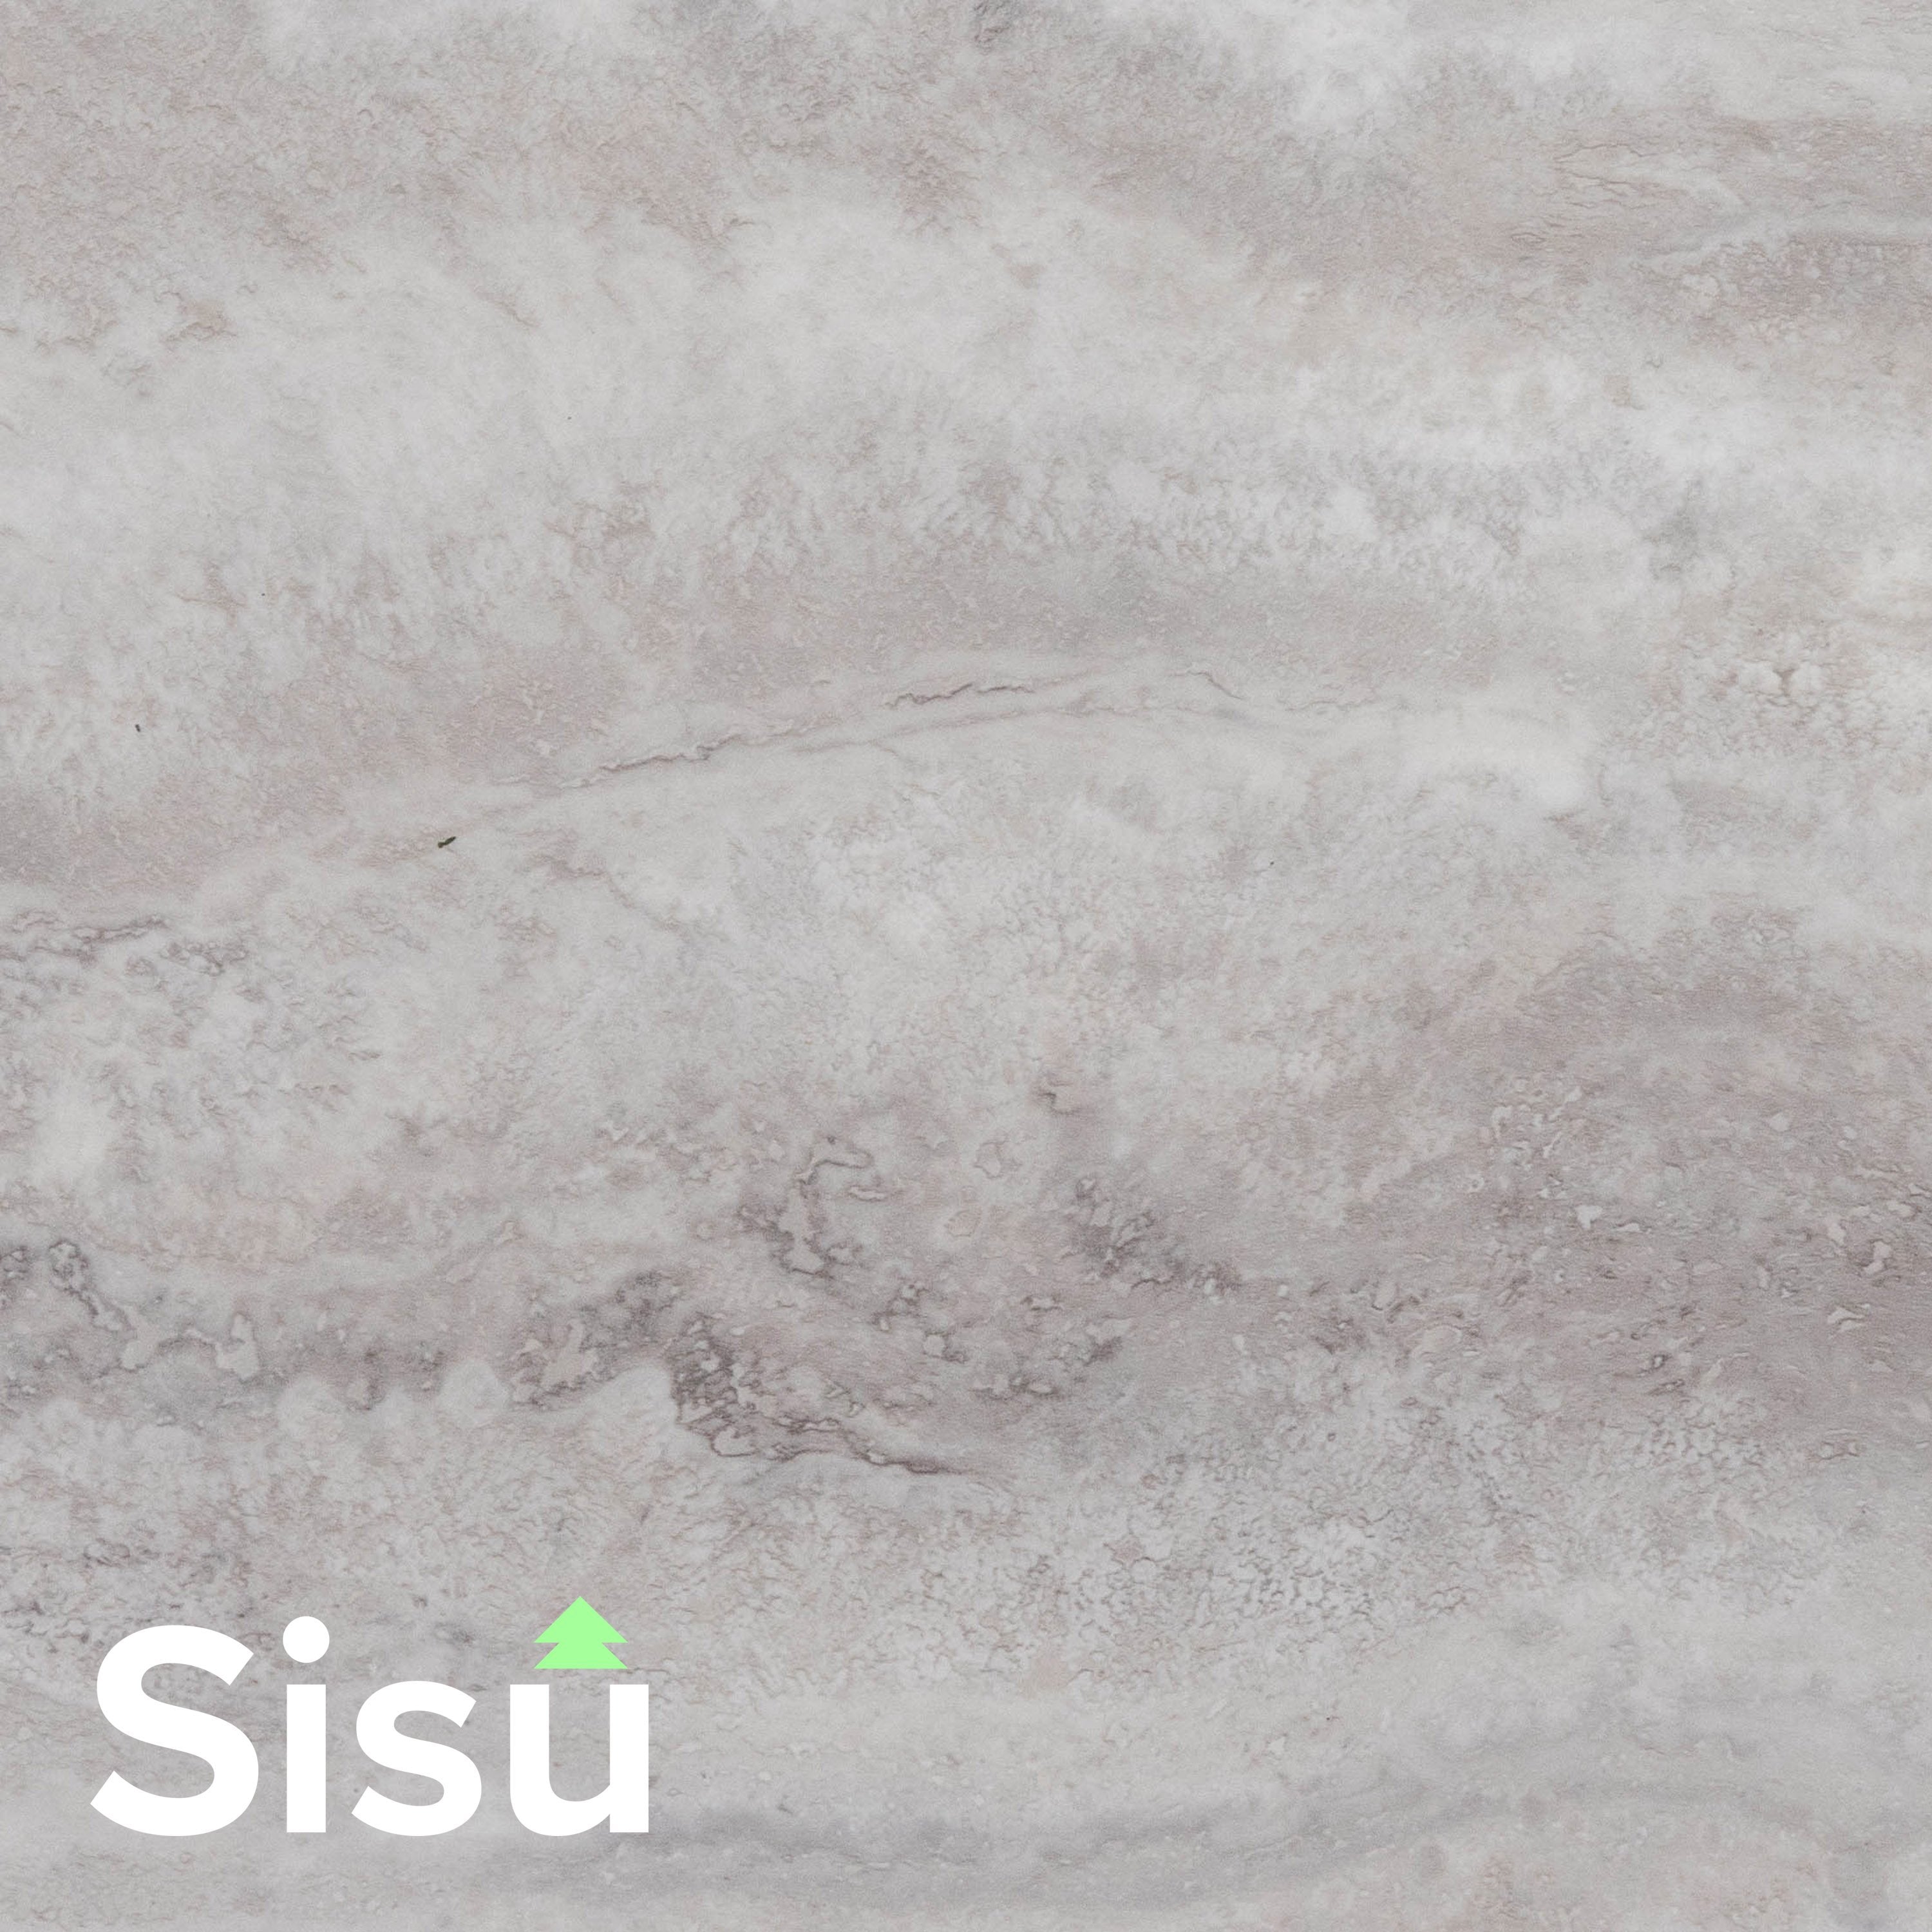 Sisu Dryback Italian Marble